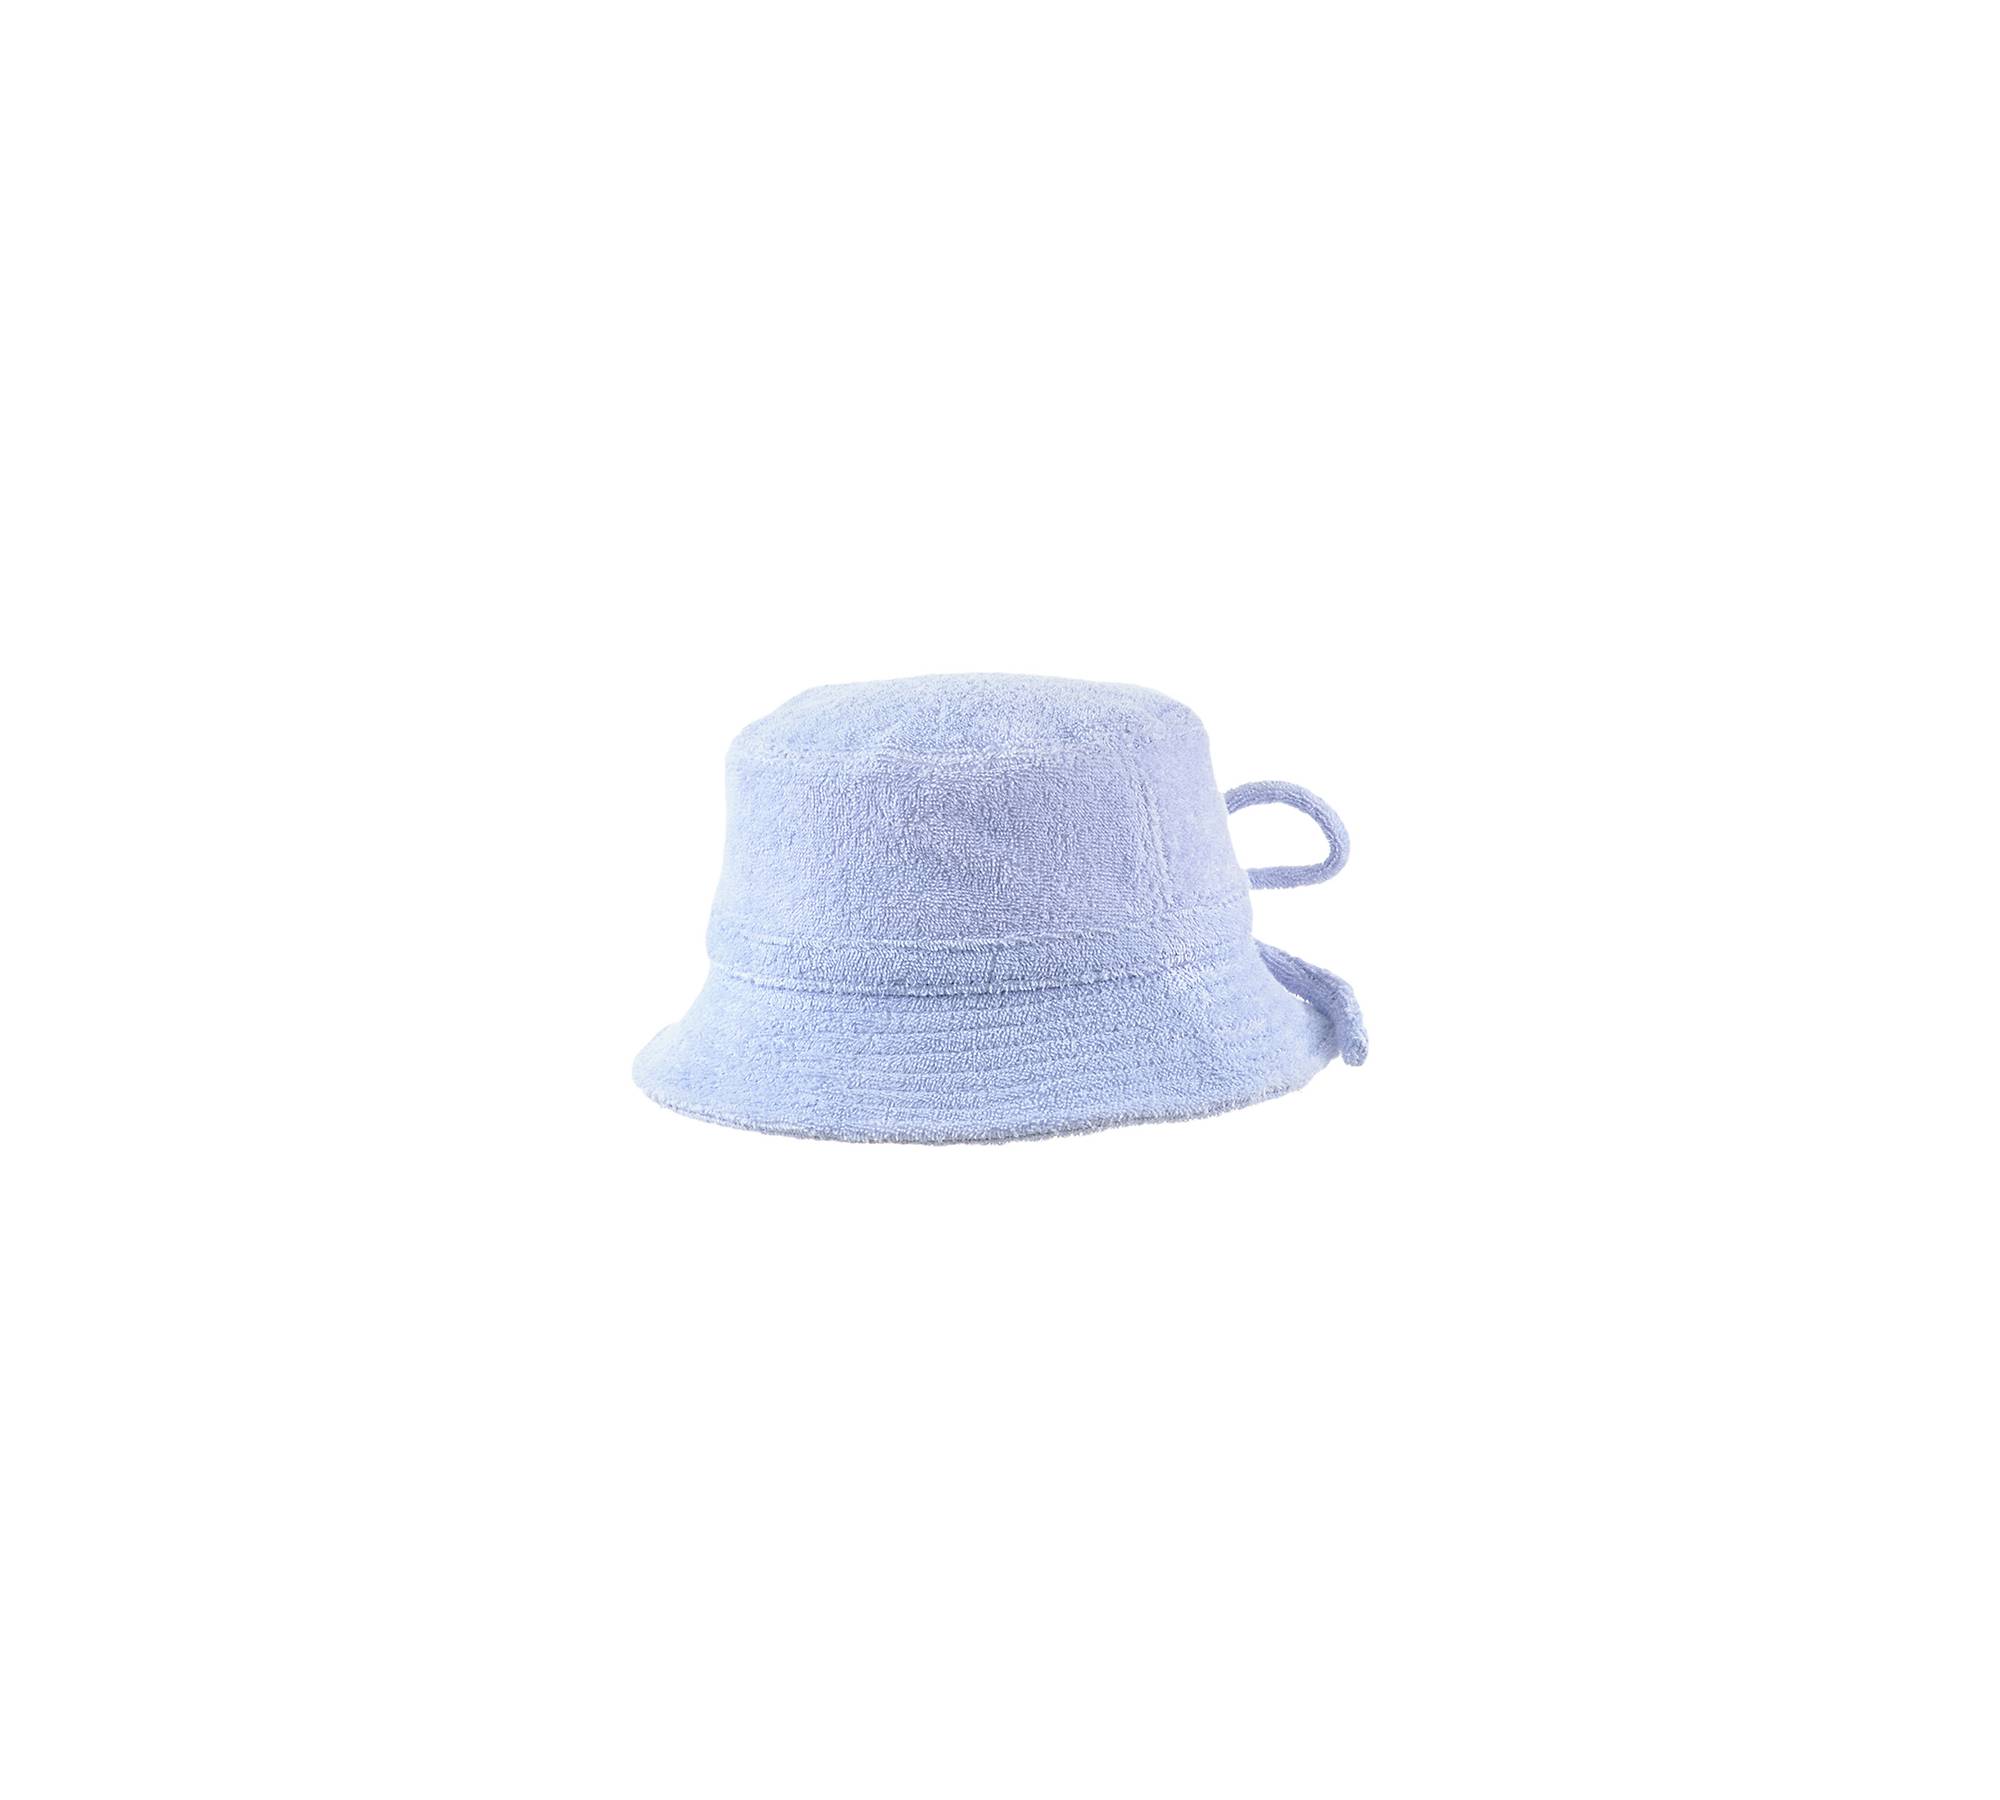 Twiy Apparel — 𝗧𝘄𝗶𝘆 𝗕𝗹𝘂𝗲 𝗕𝗲𝗿𝗿𝘆 (Bucket Hat)